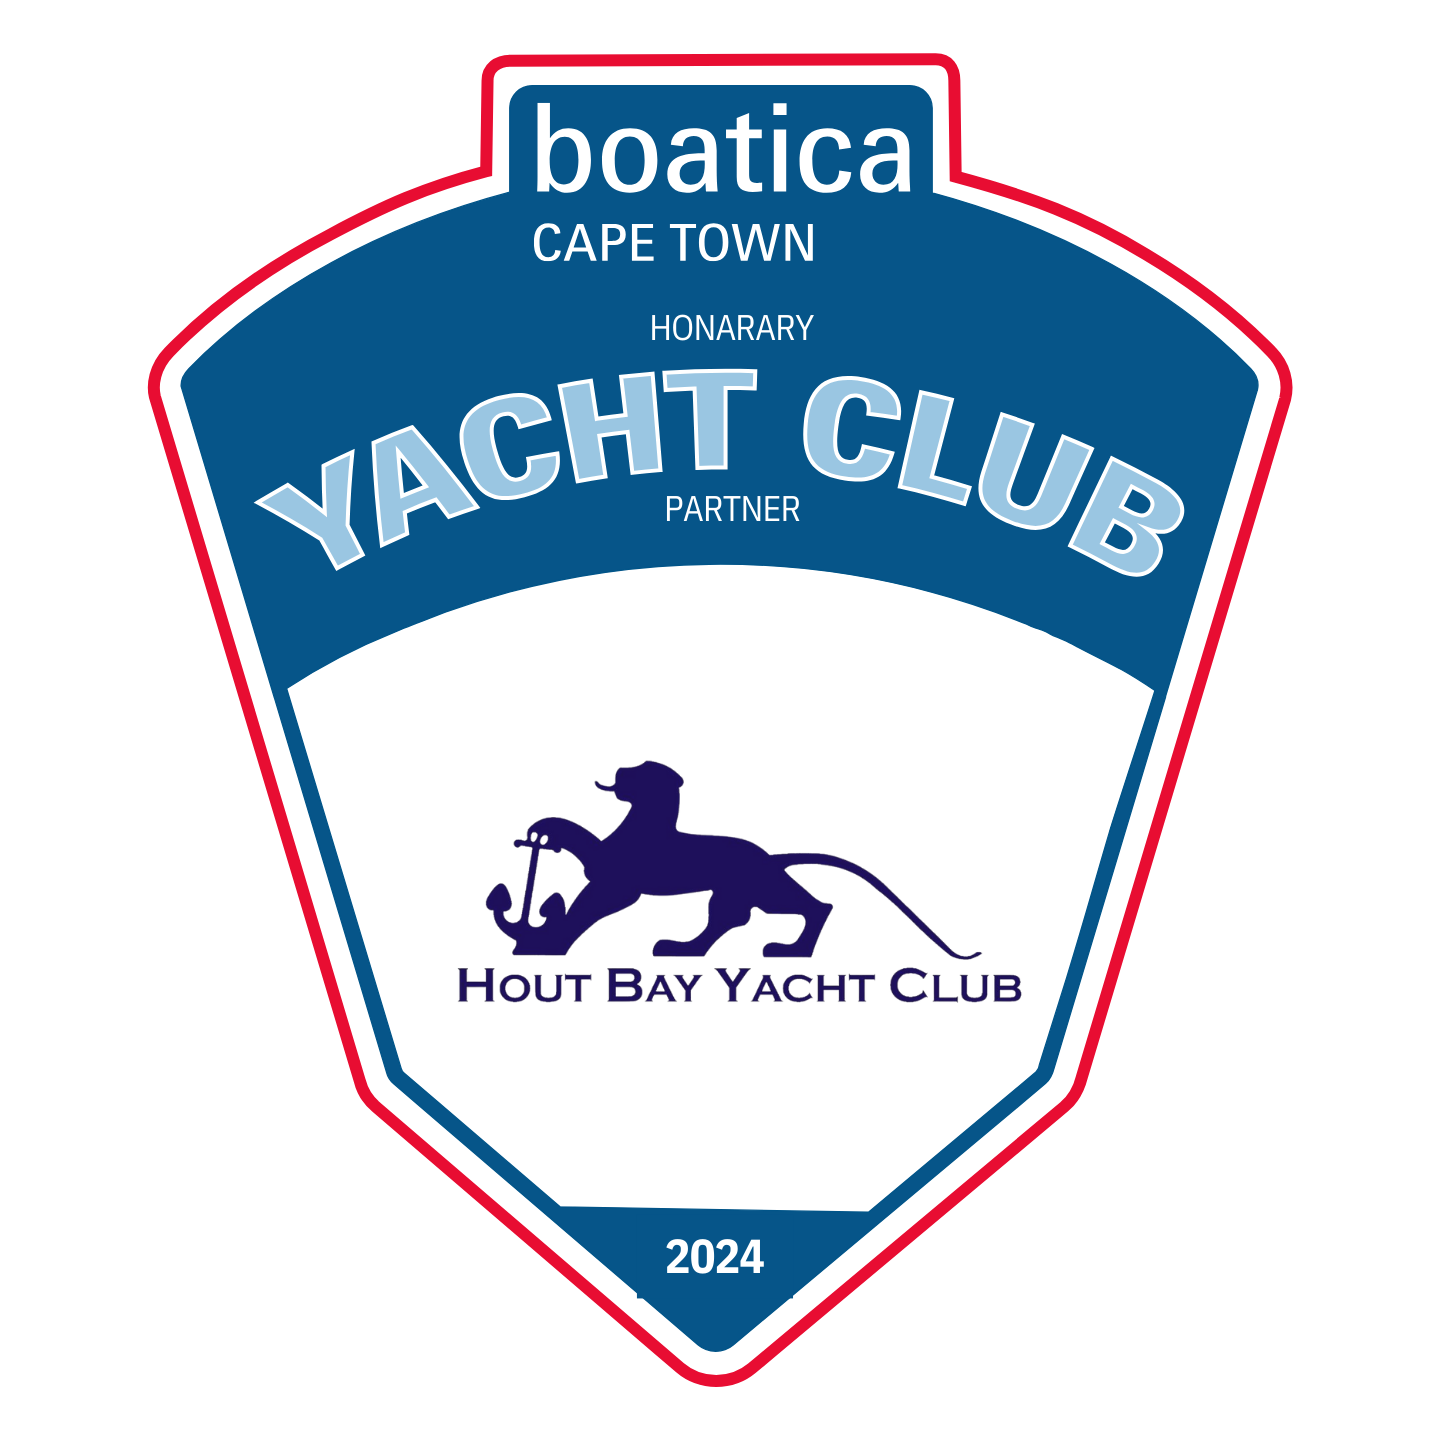 Boatica honorary yacht club partner logo.ai - 6